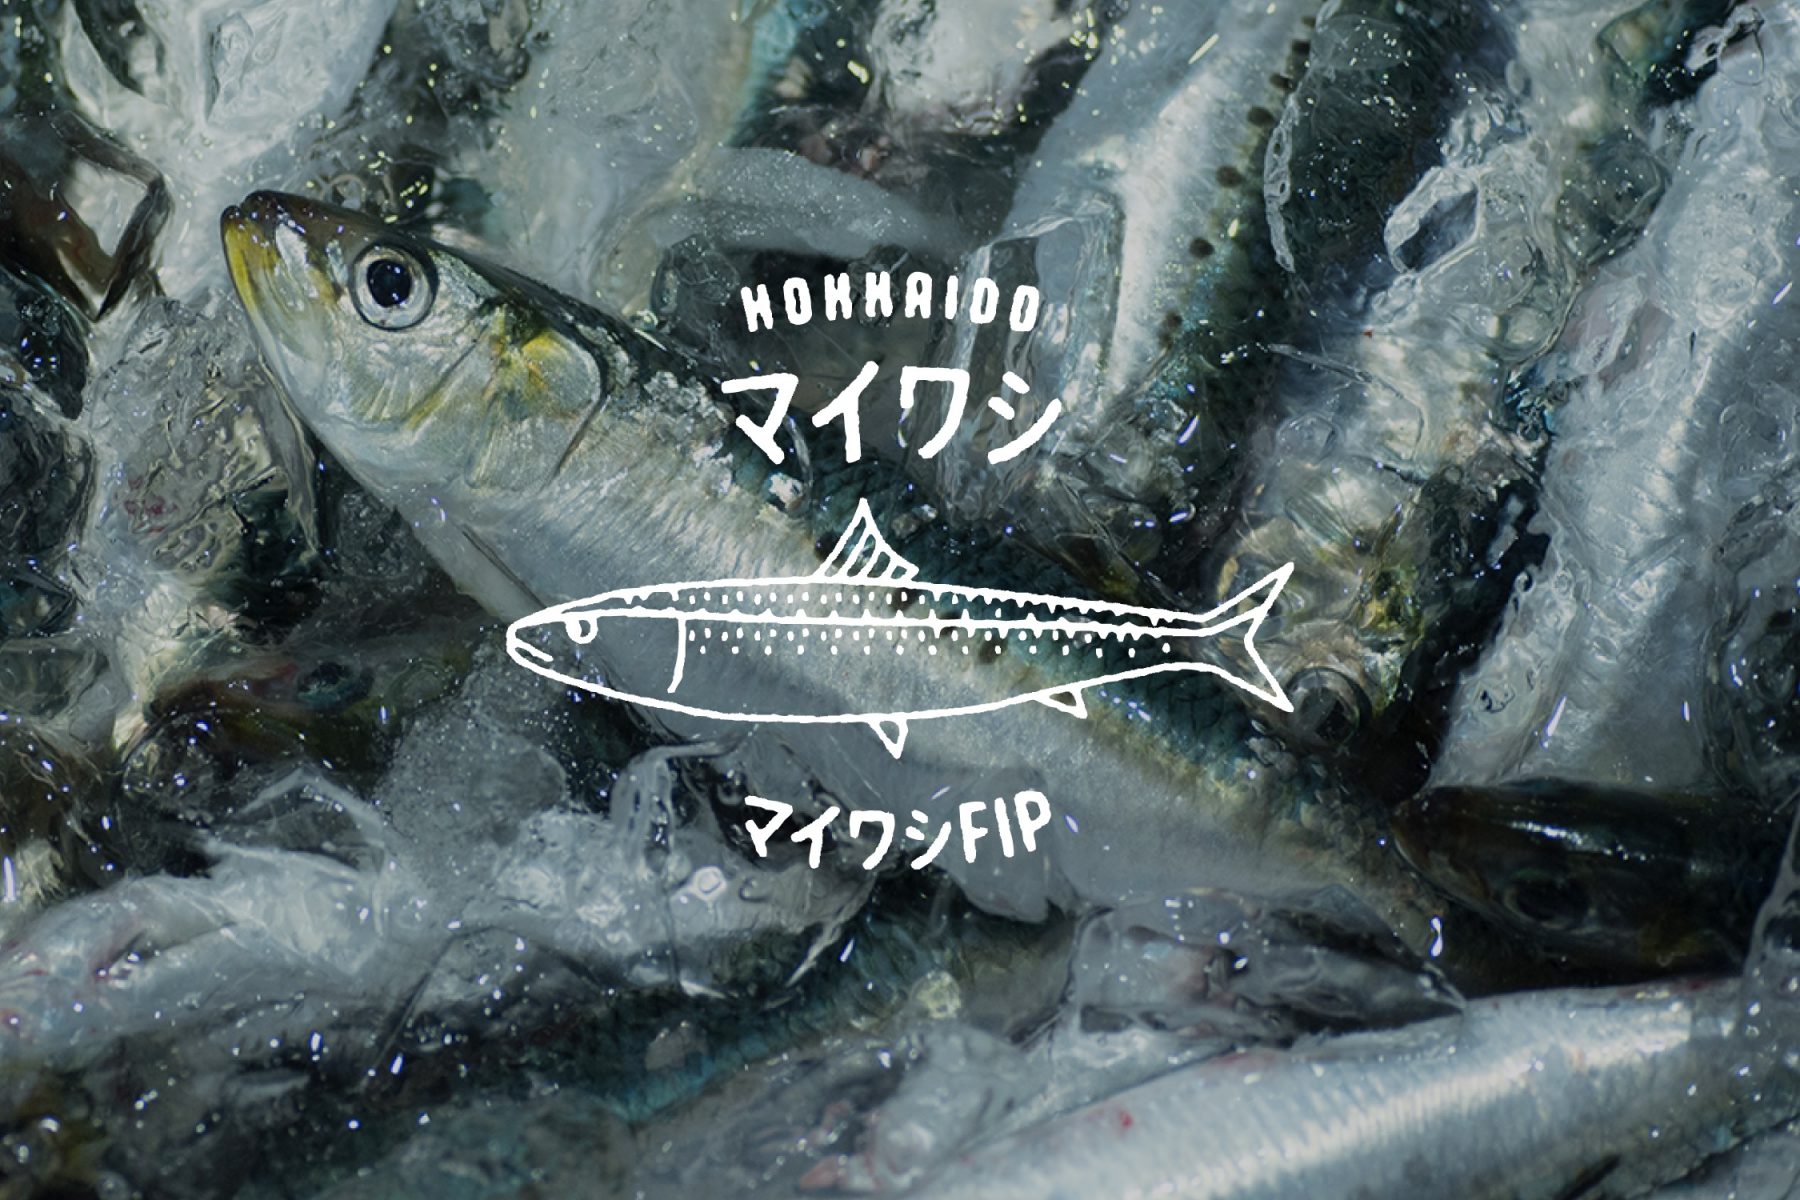 HOKKAIDO JAPANESE SARDINE FISHERY IMPROVEMENT PROJECT (FIP)